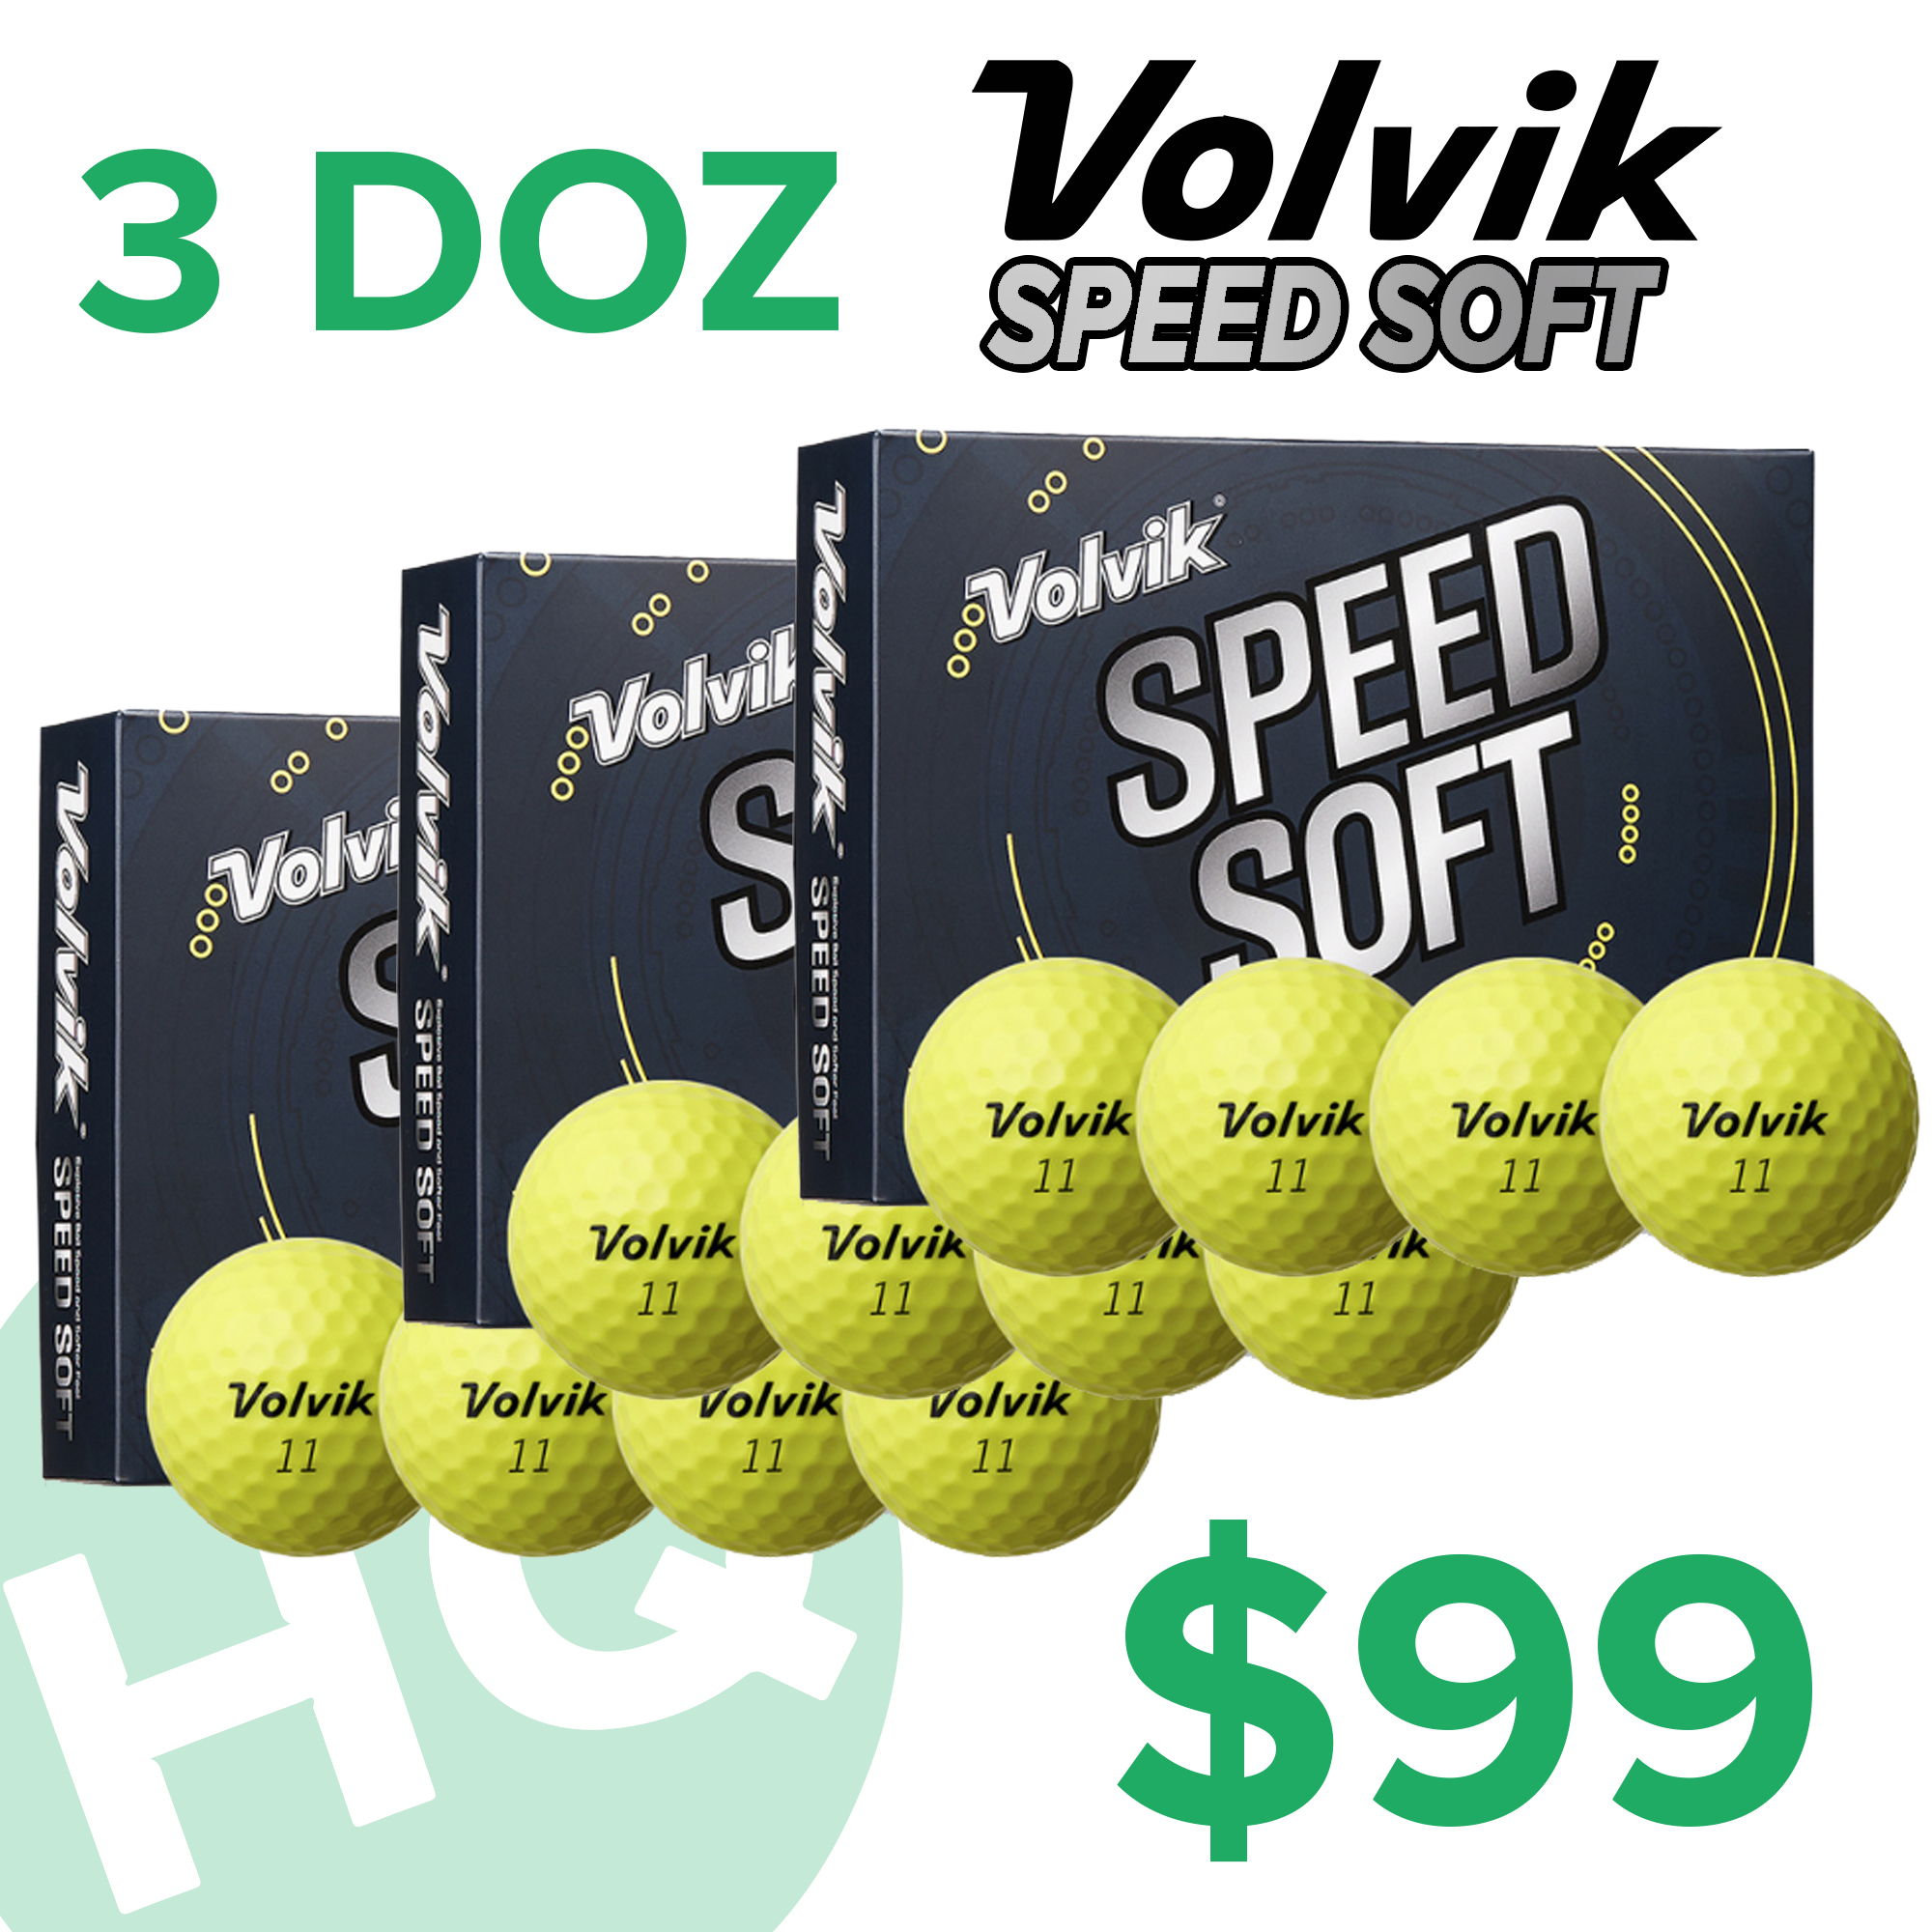 Volvik Speed Soft Yellow Dozen - 3 for $99